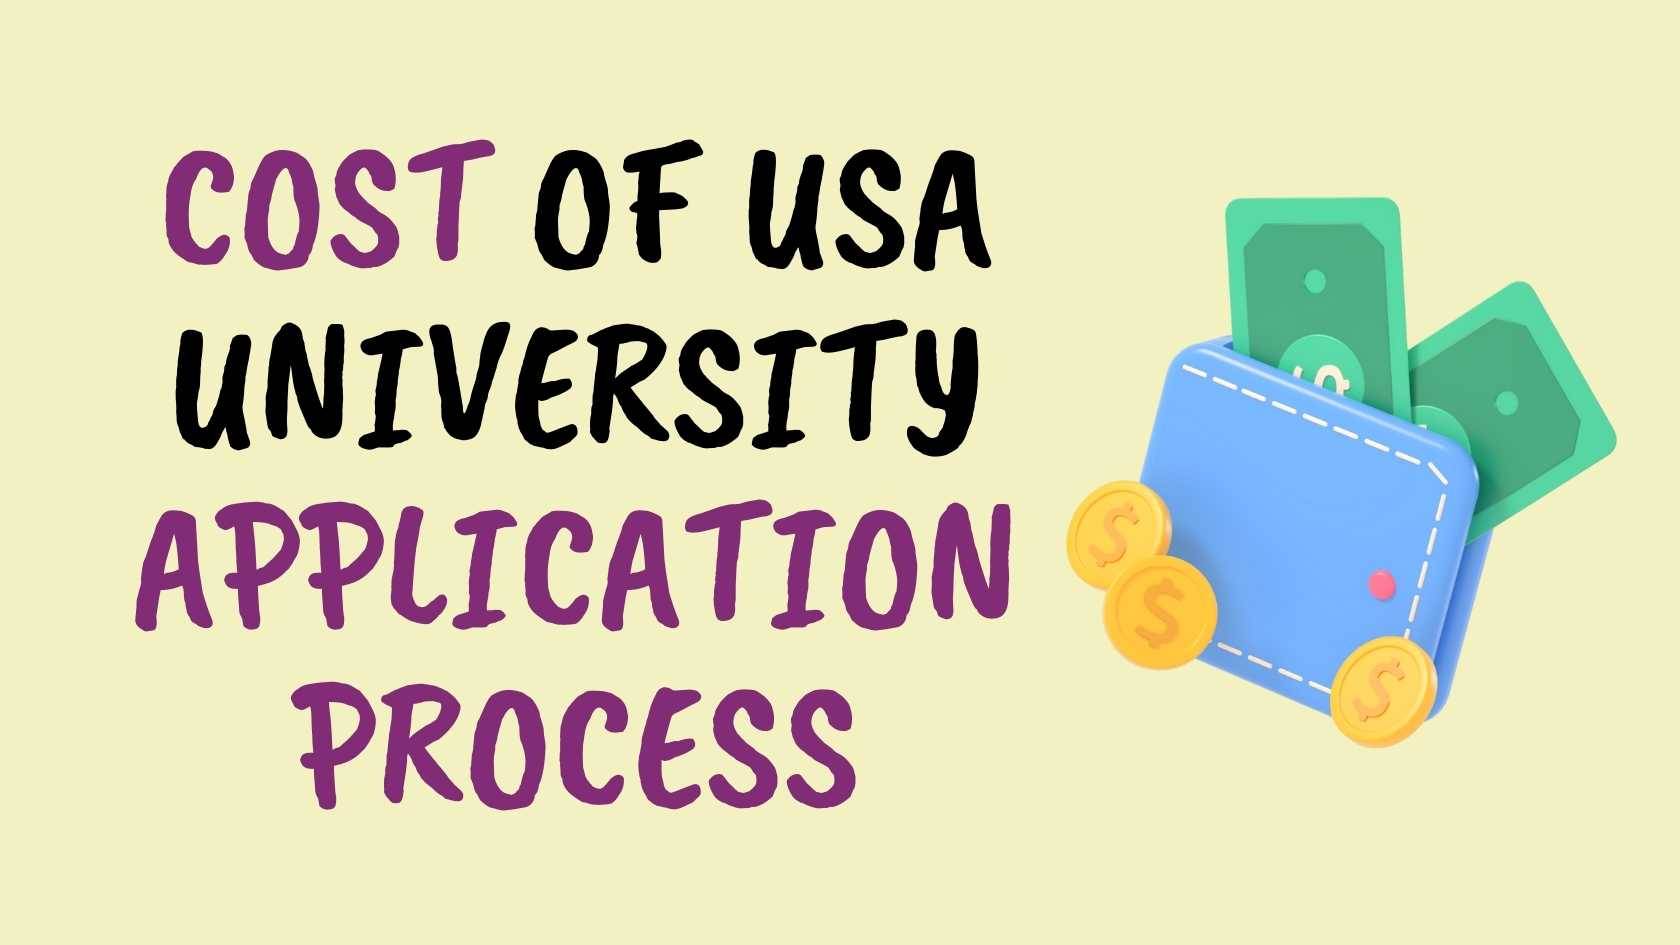 Cost of USA university application process